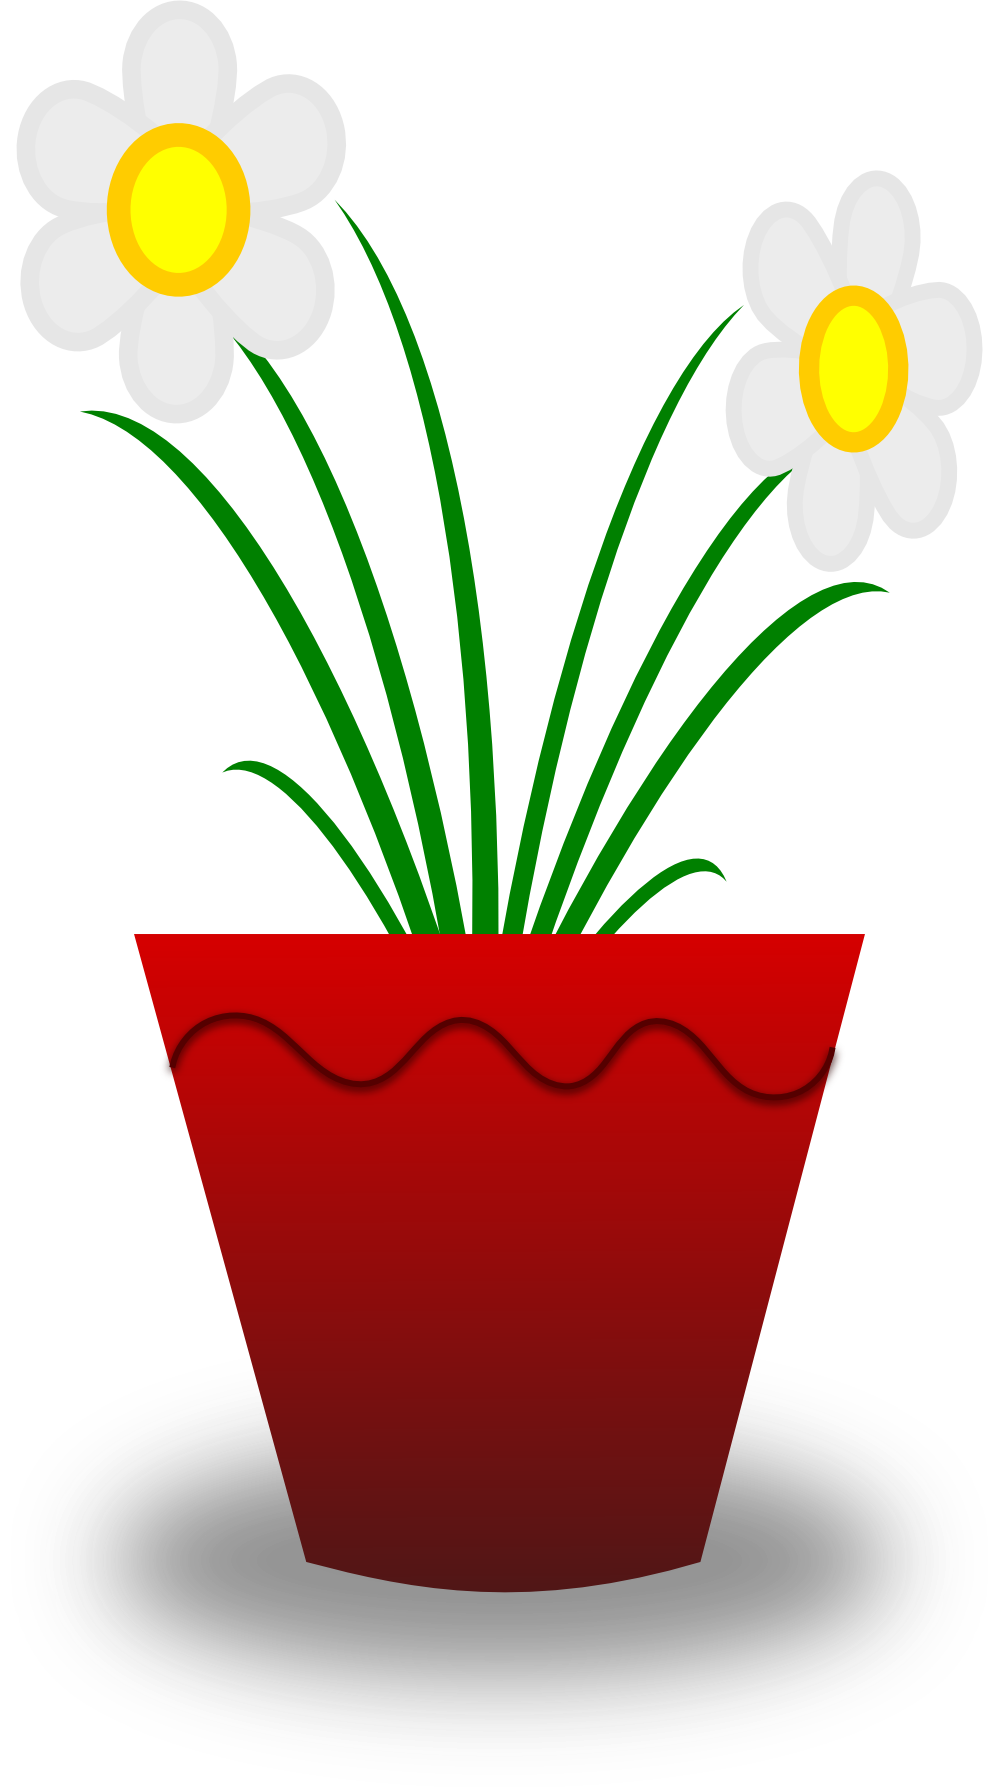 Flower Pots Clip Art - Vector Clip Art Online, Royalty Free ...